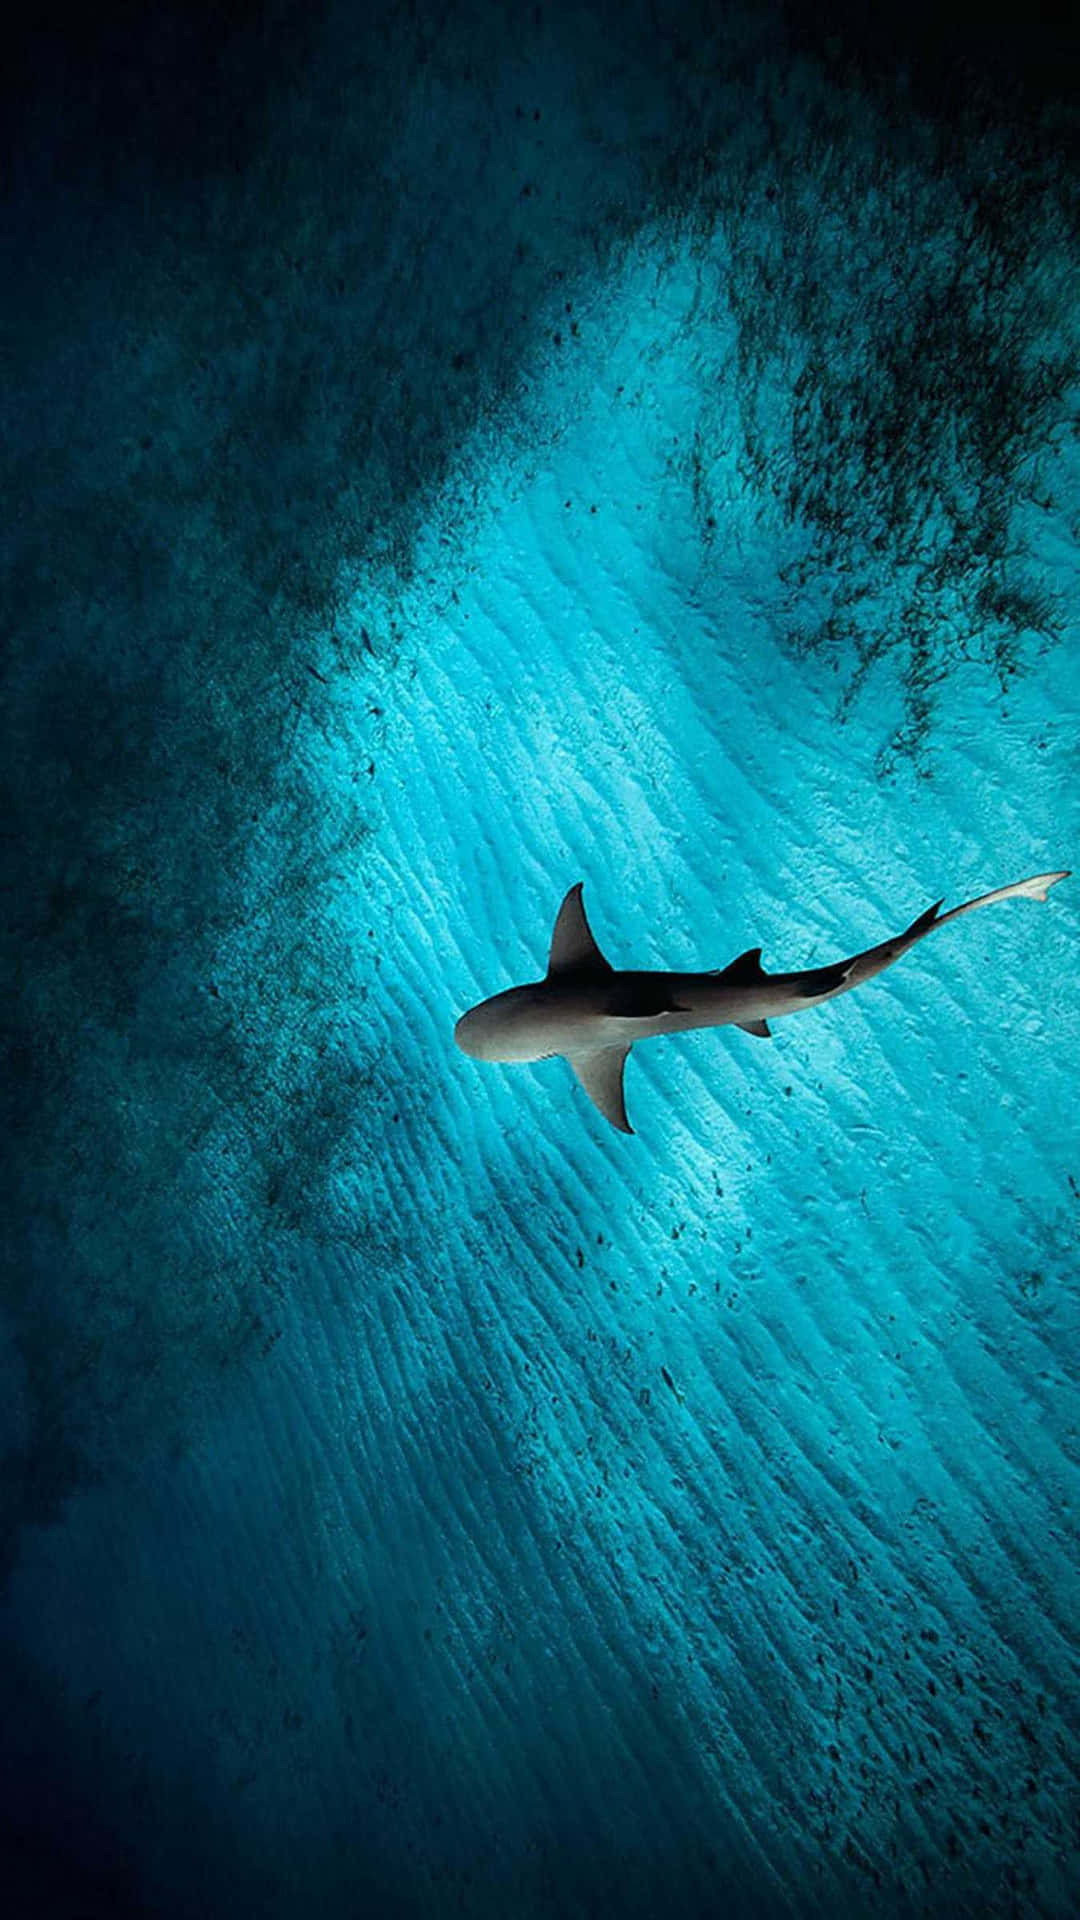 A Shark Swimming In The Ocean Wallpaper